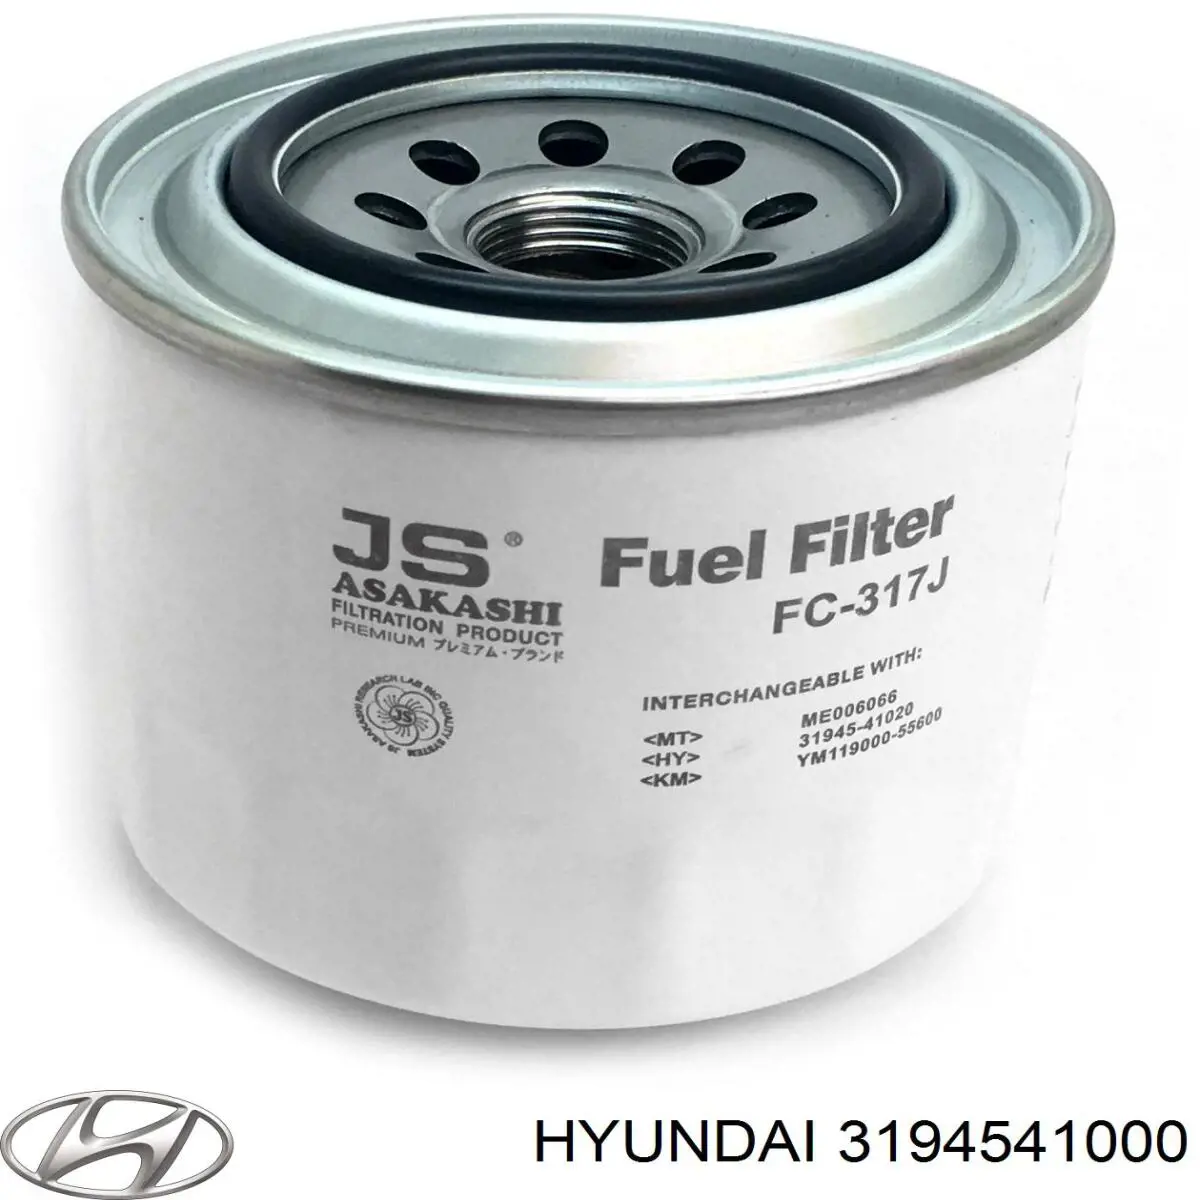 3194541000 Hyundai/Kia filtro de combustible